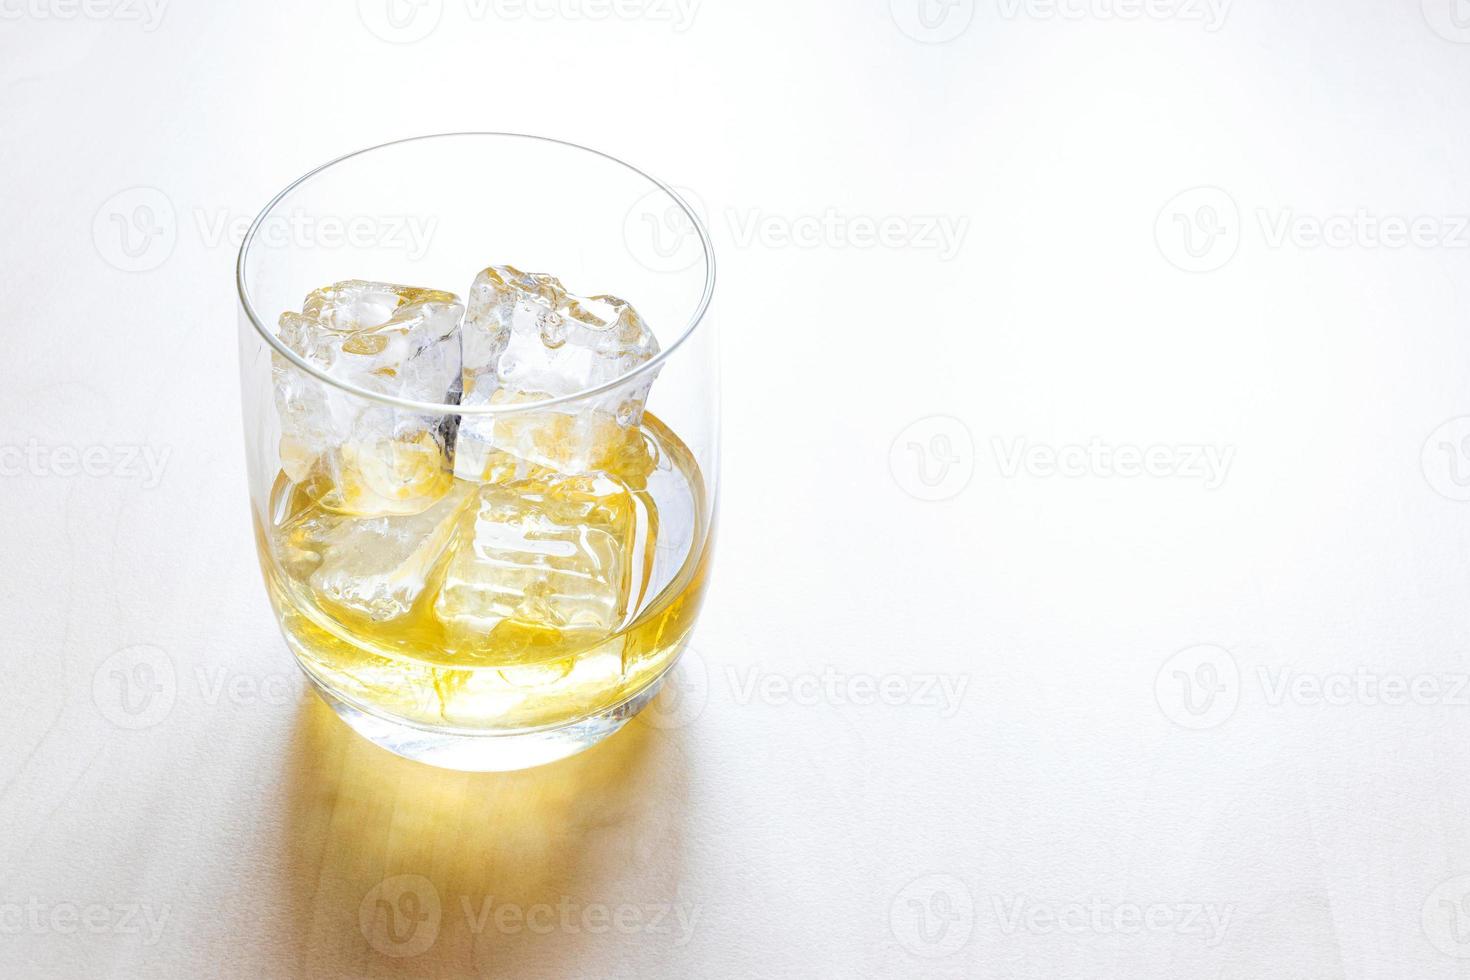 porción de whisky escocés de malta con hielo foto